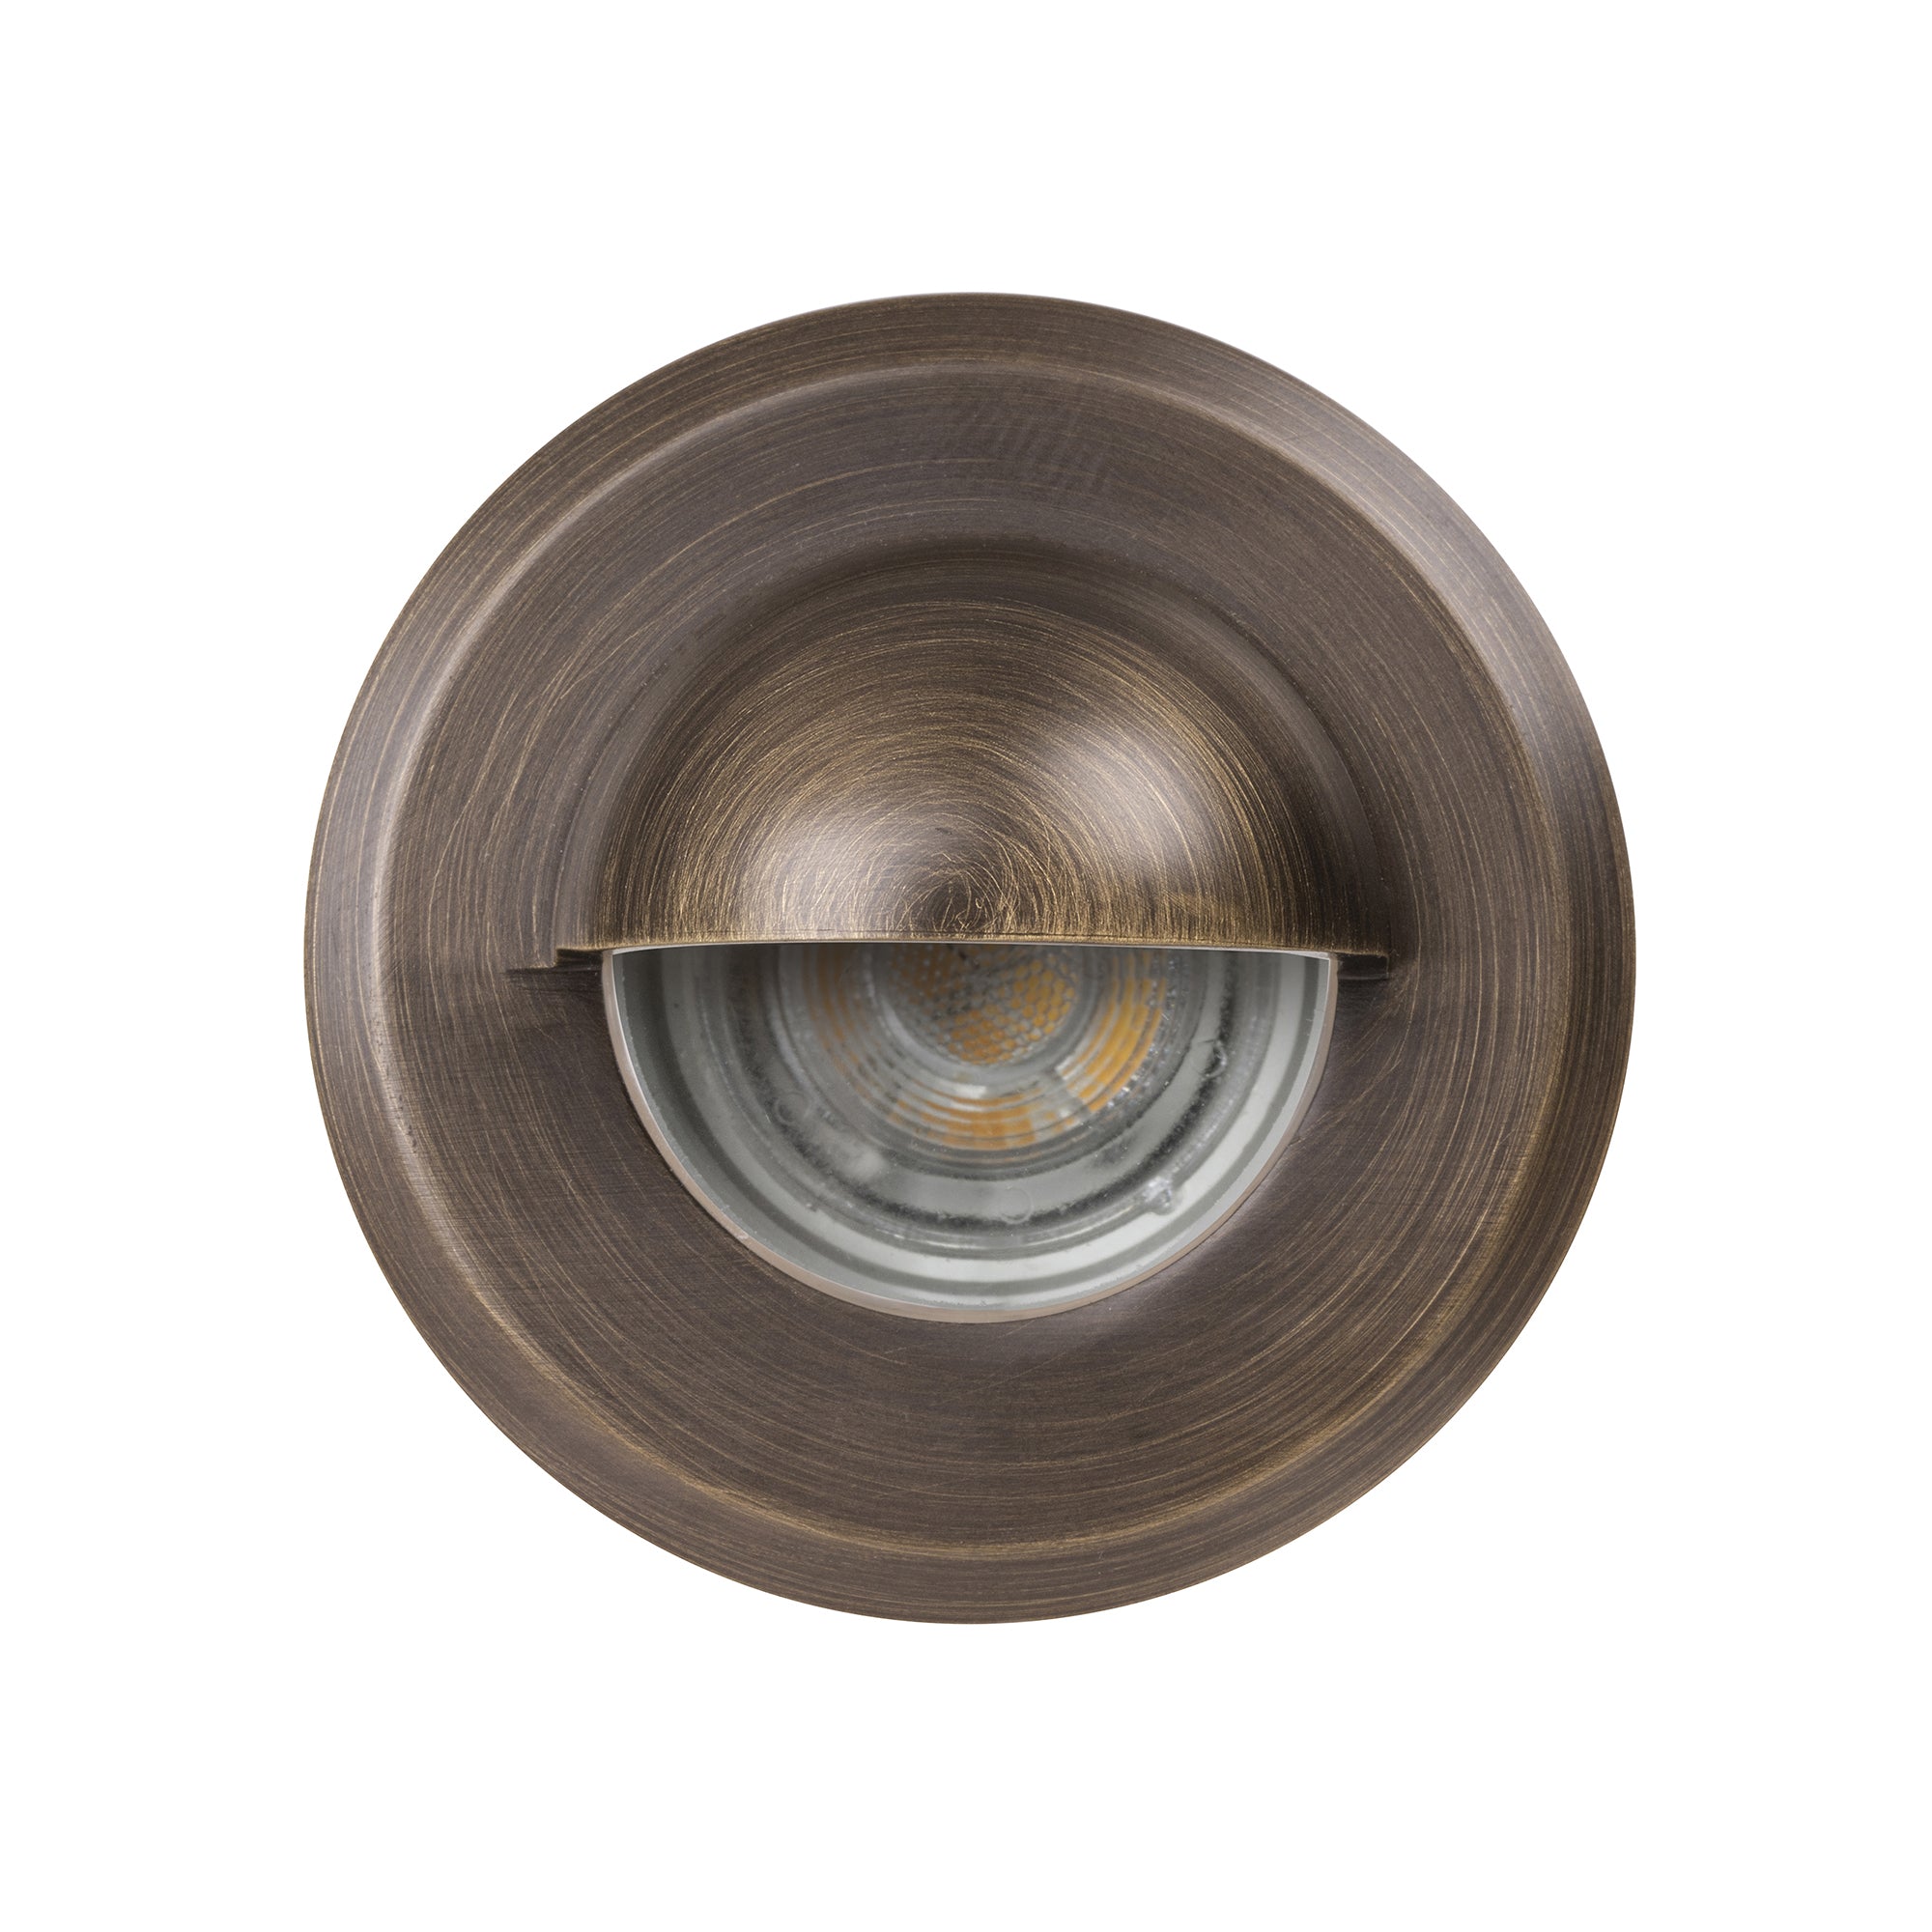 HV2899NW-AB -  Lokk Antique Brass LED Wall Light with Eyelid